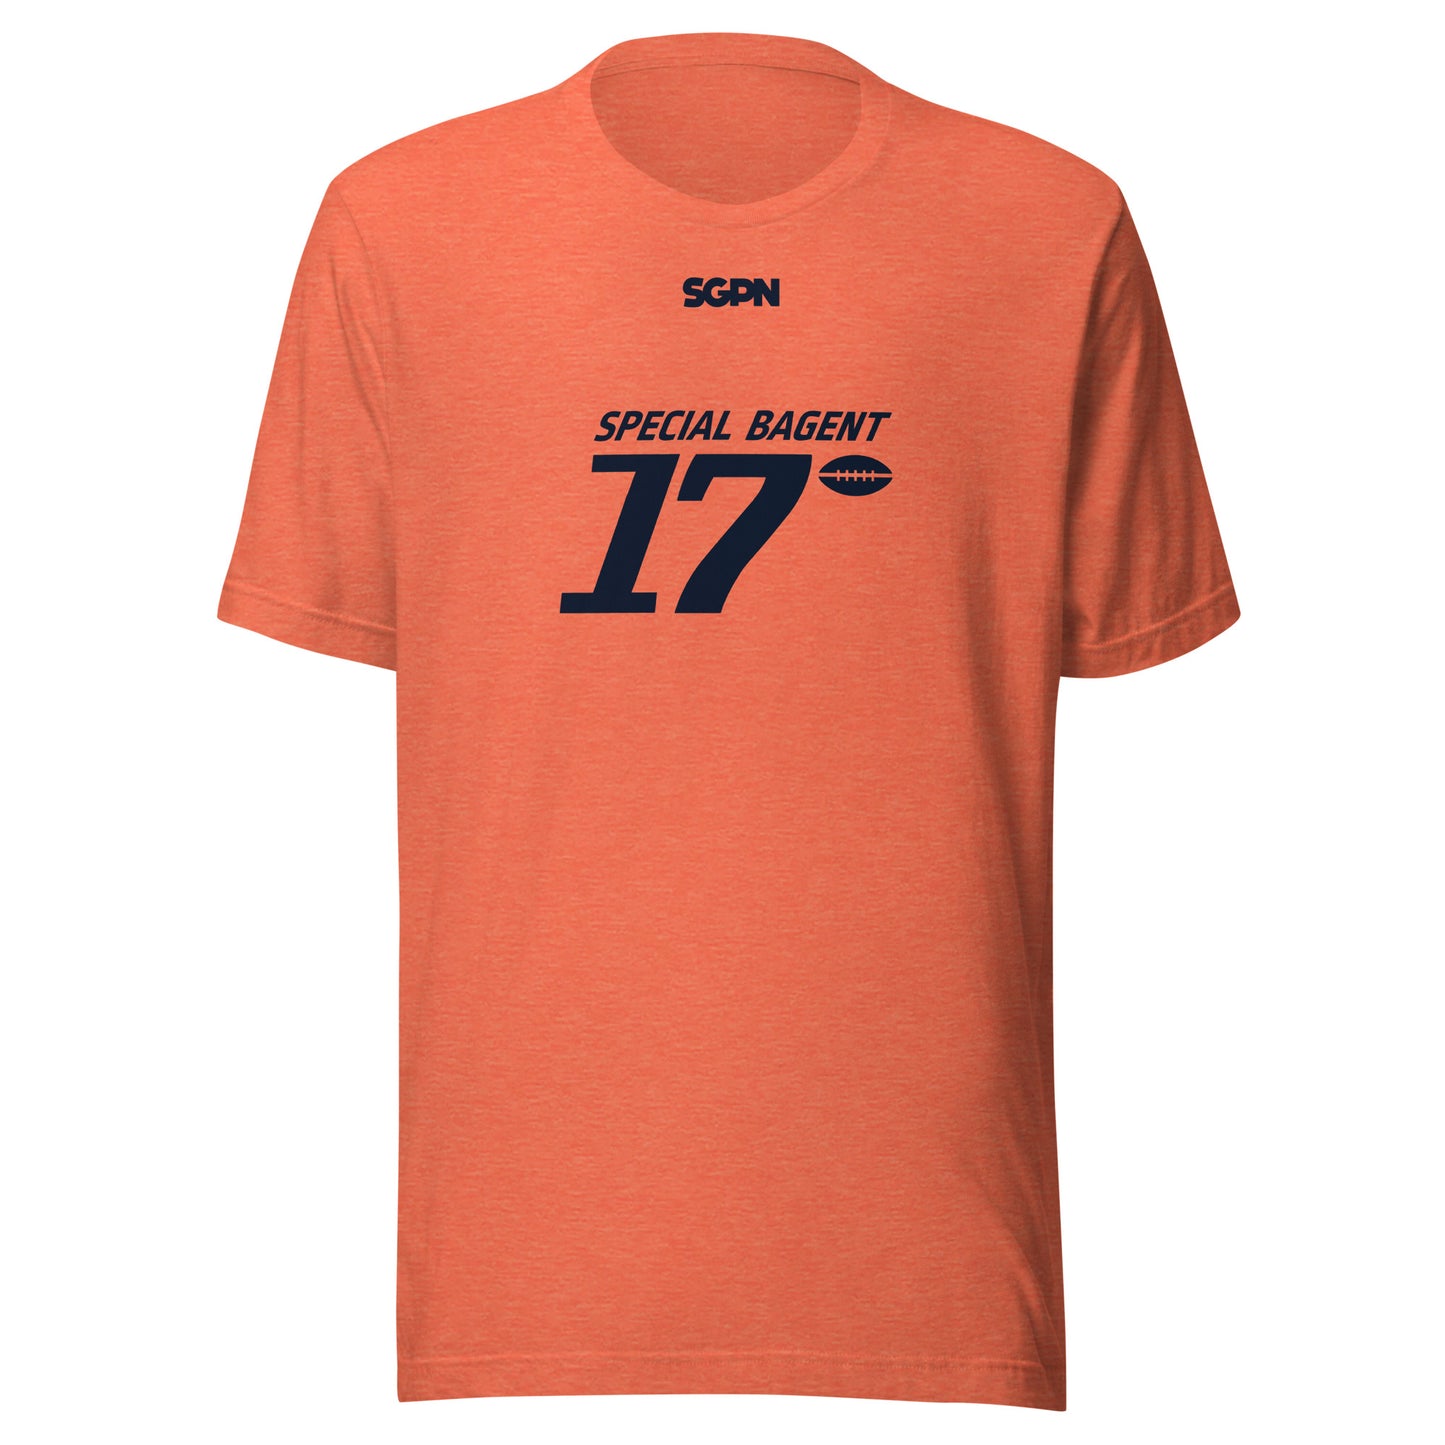 Special Bagent 17 - Unisex t-shirt